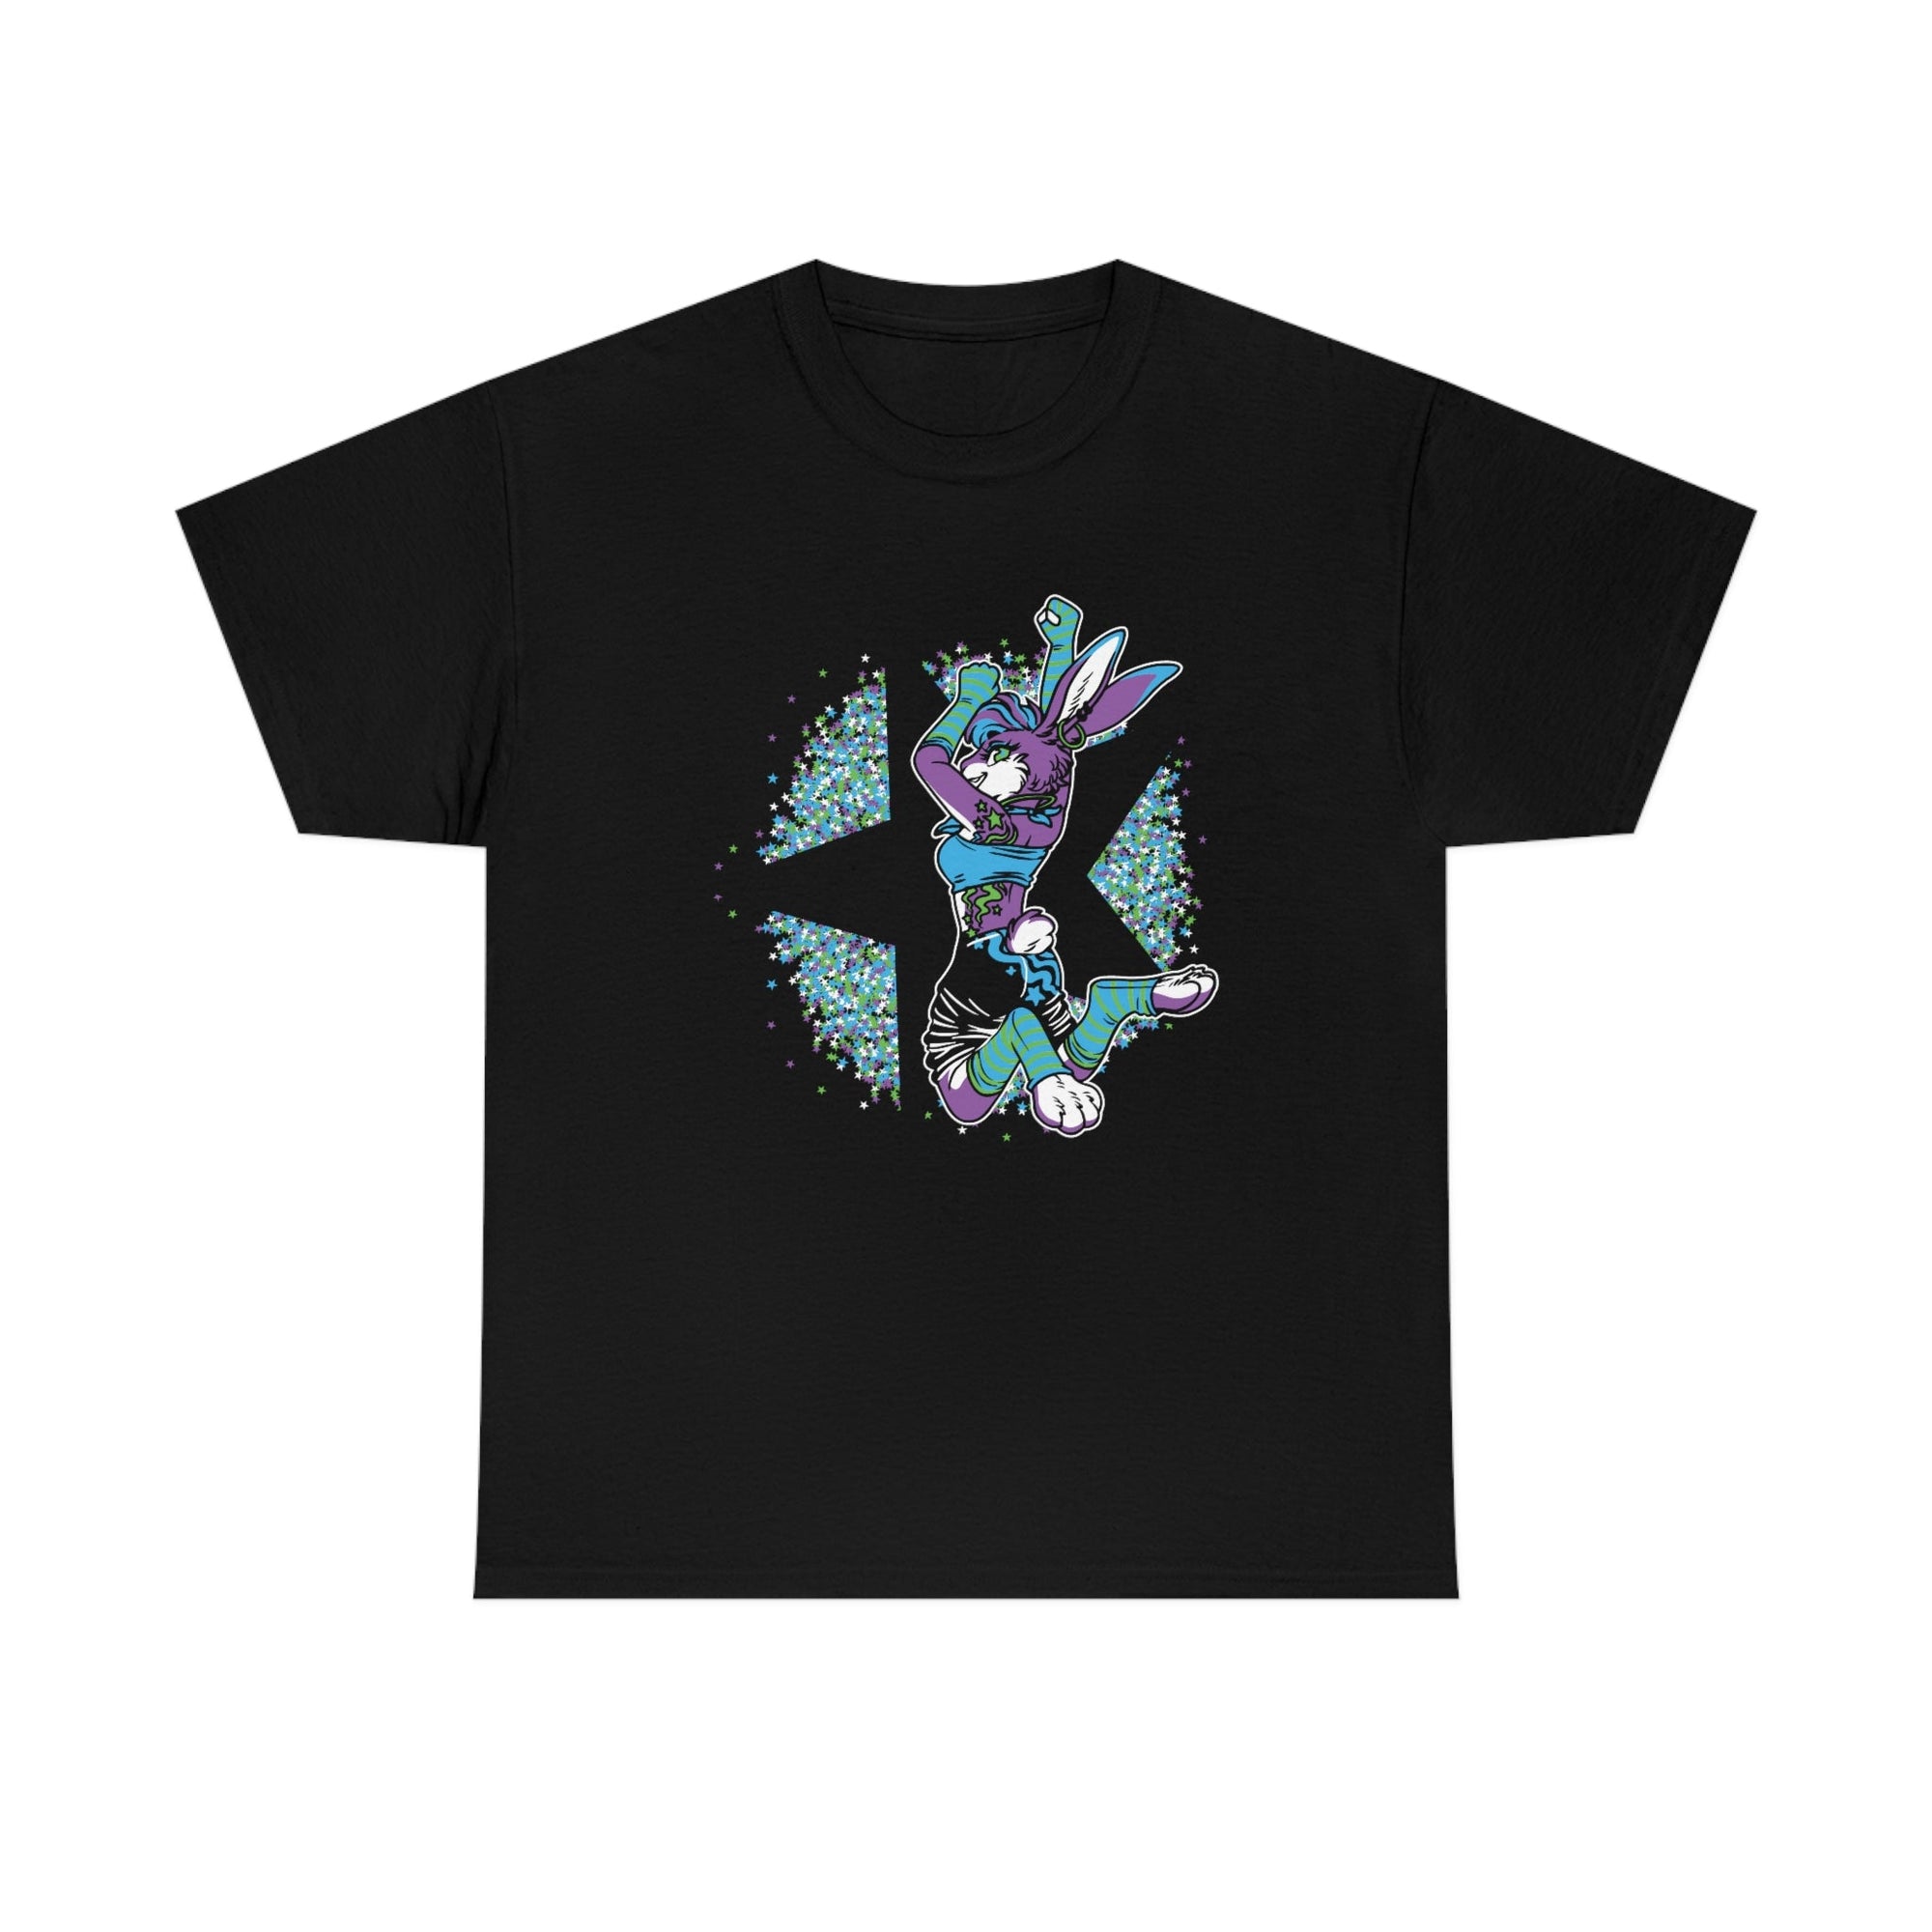 Rave Rabbit - T-Shirt T-Shirt Artworktee Black S 